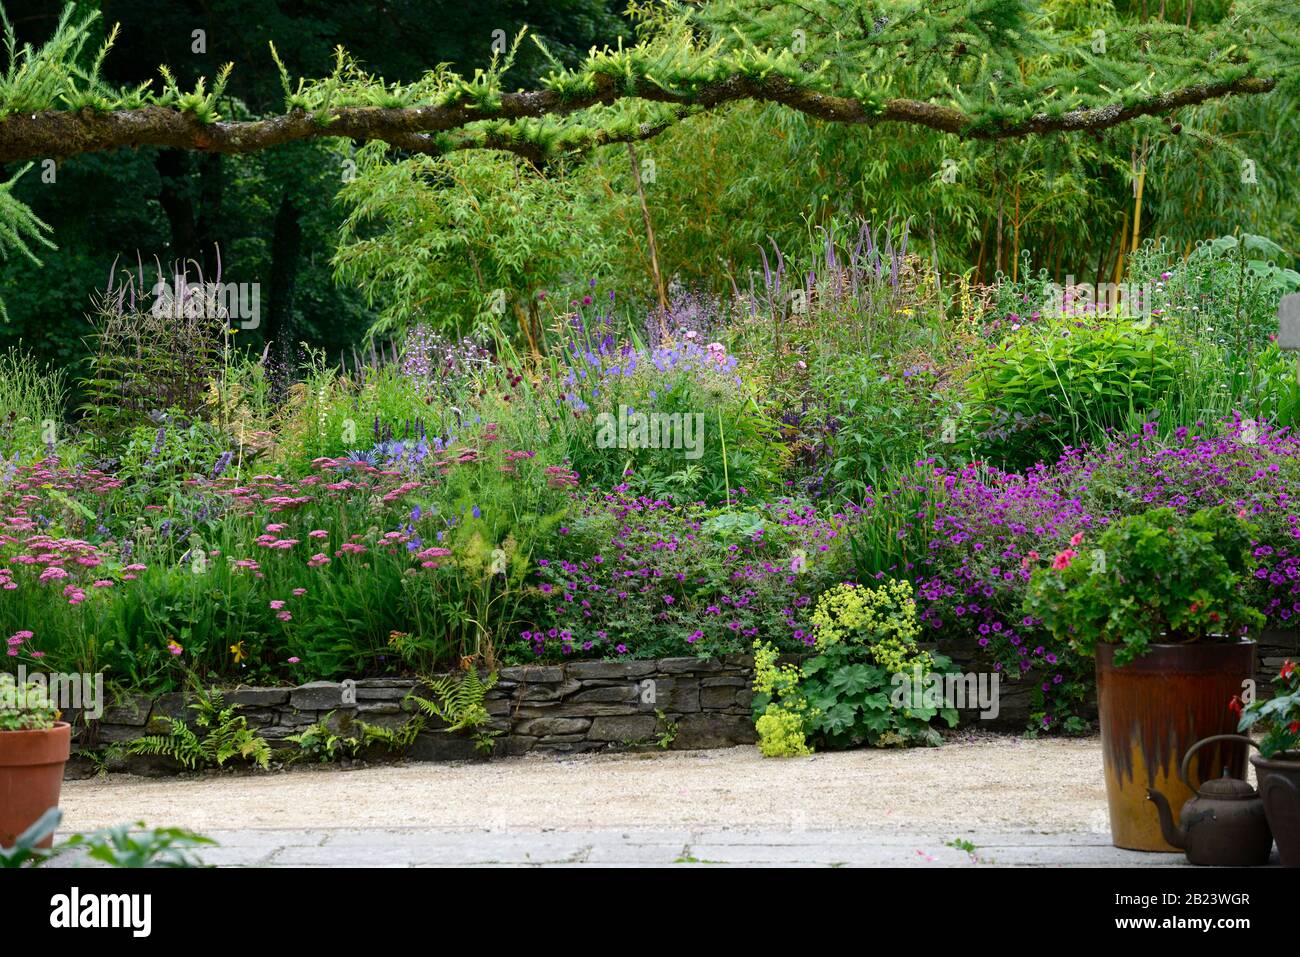 June Blake's Garden,Wicklow,Ireland,Garden,gardens,herbaceous border,mix,mixed,planting,perennials,geranium,achillea,agastache,veronicastrum,echinops, Stock Photo